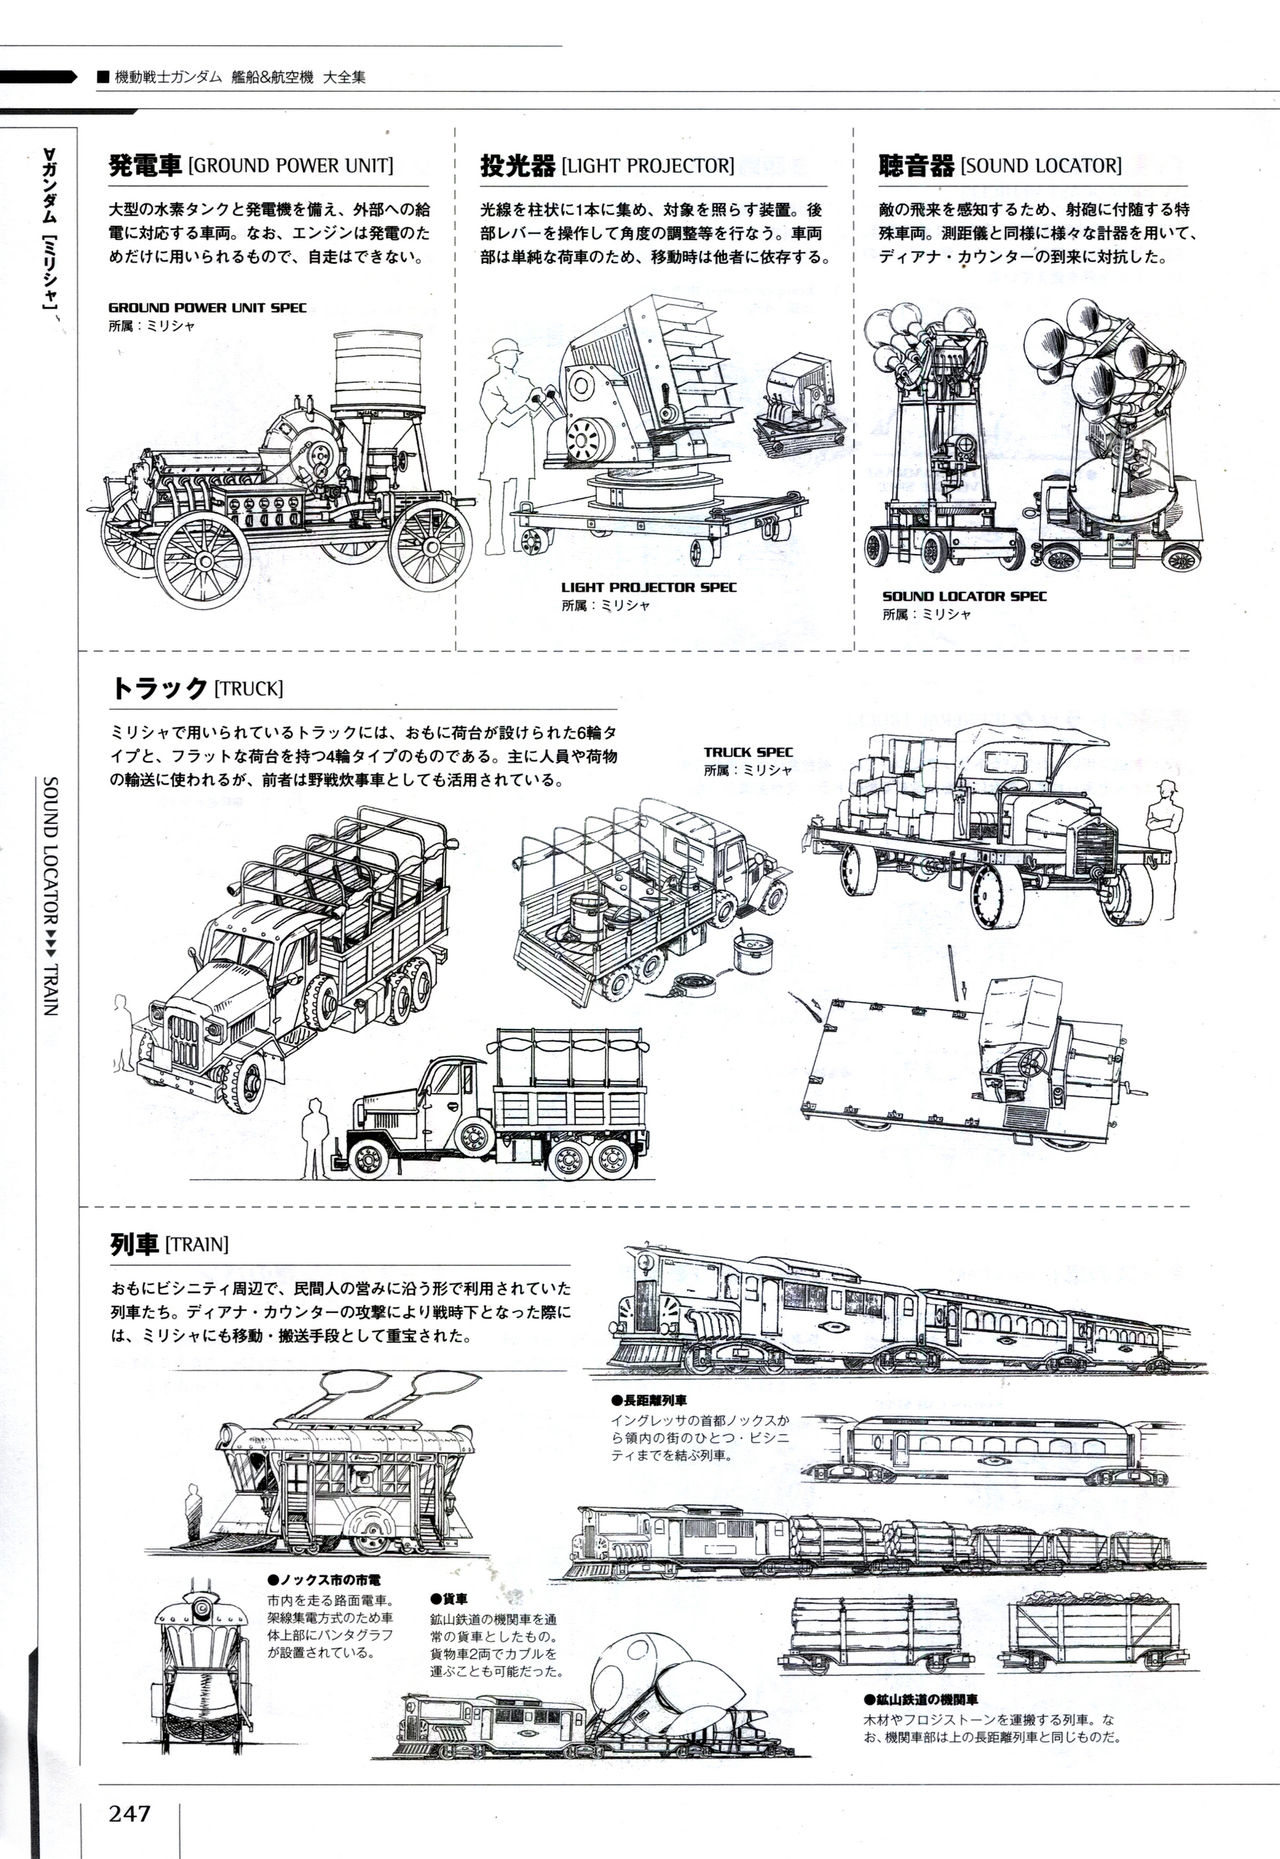 Mobile Suit Gundam - Ship & Aerospace Plane Encyclopedia - Revised Edition 252